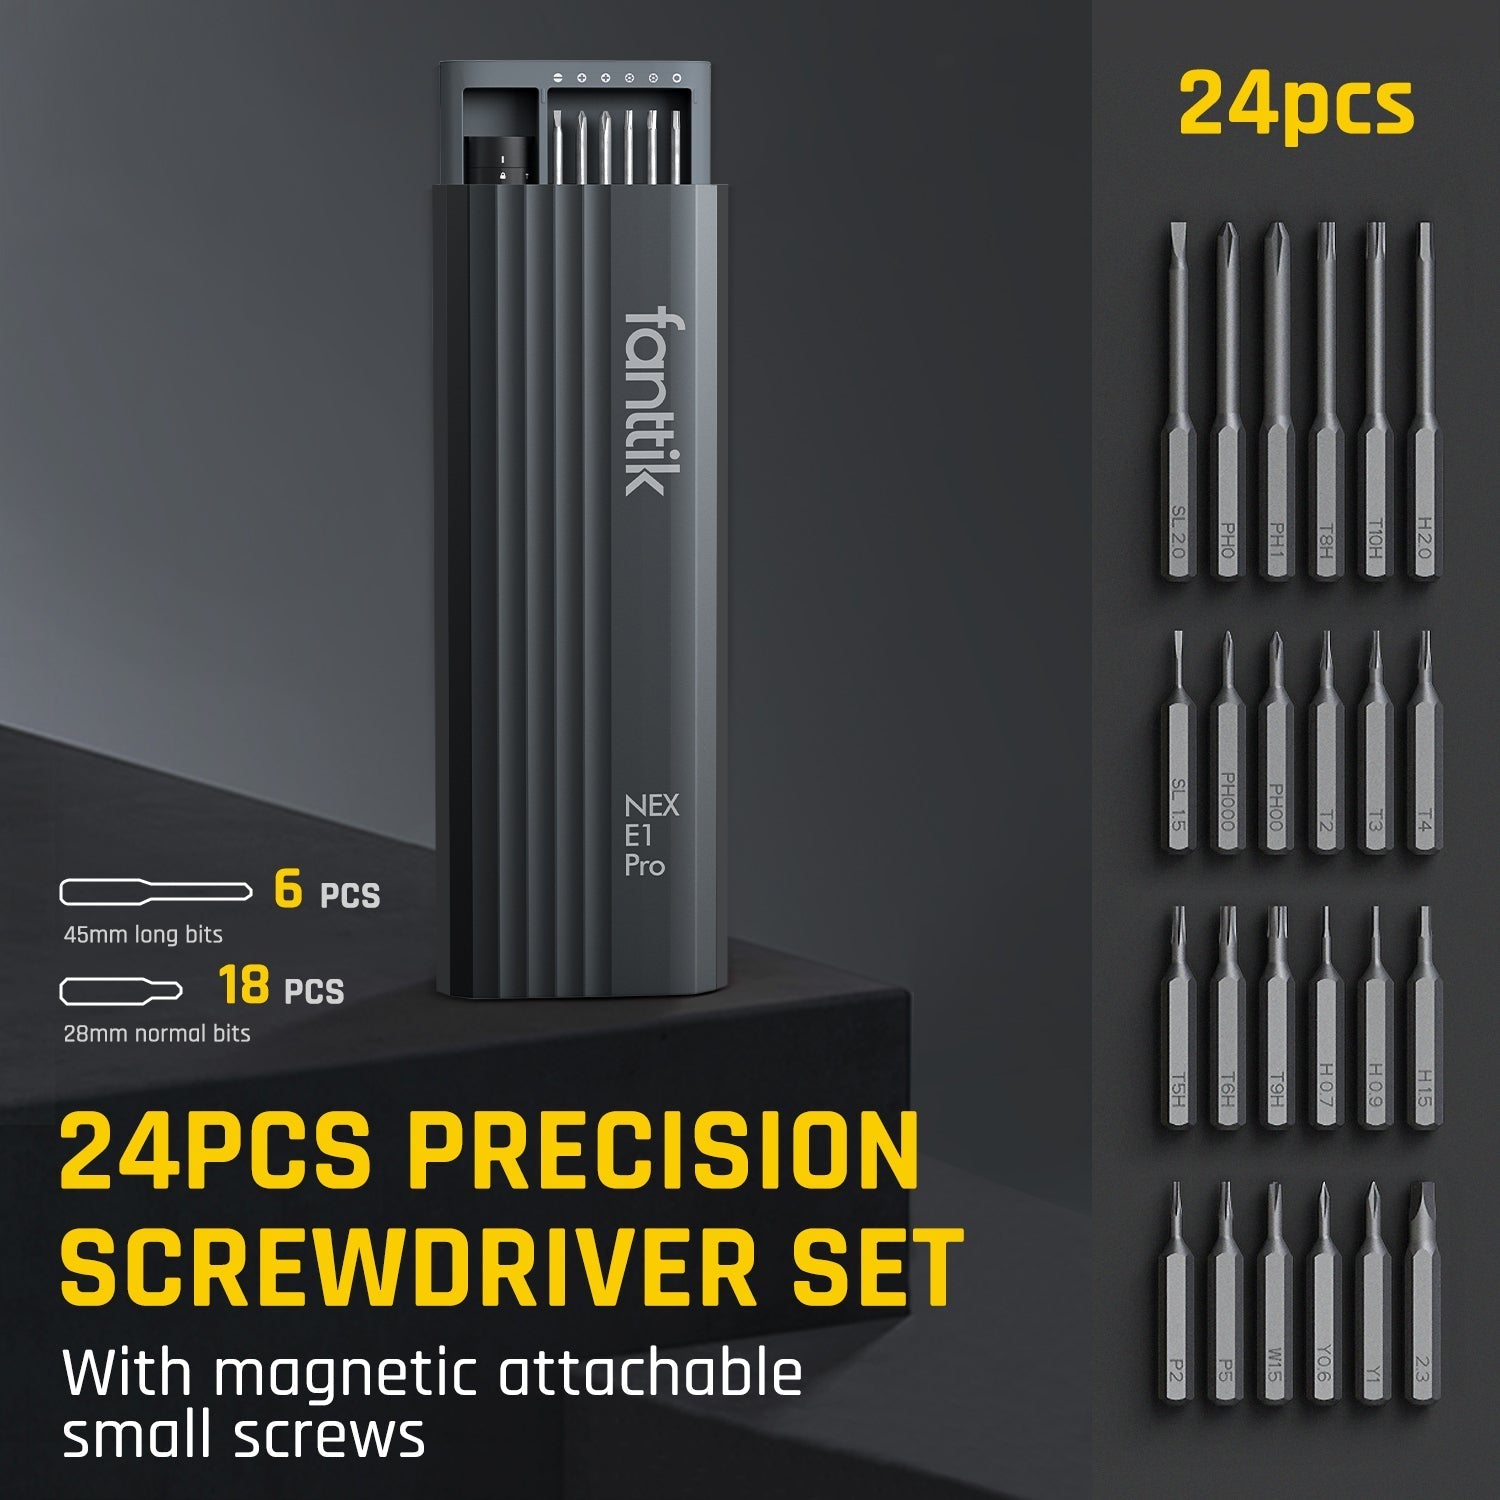 Fanttik E1 Pro Mini Precision Electric Screwdriver has 24PCS Precision Screwdriver Set